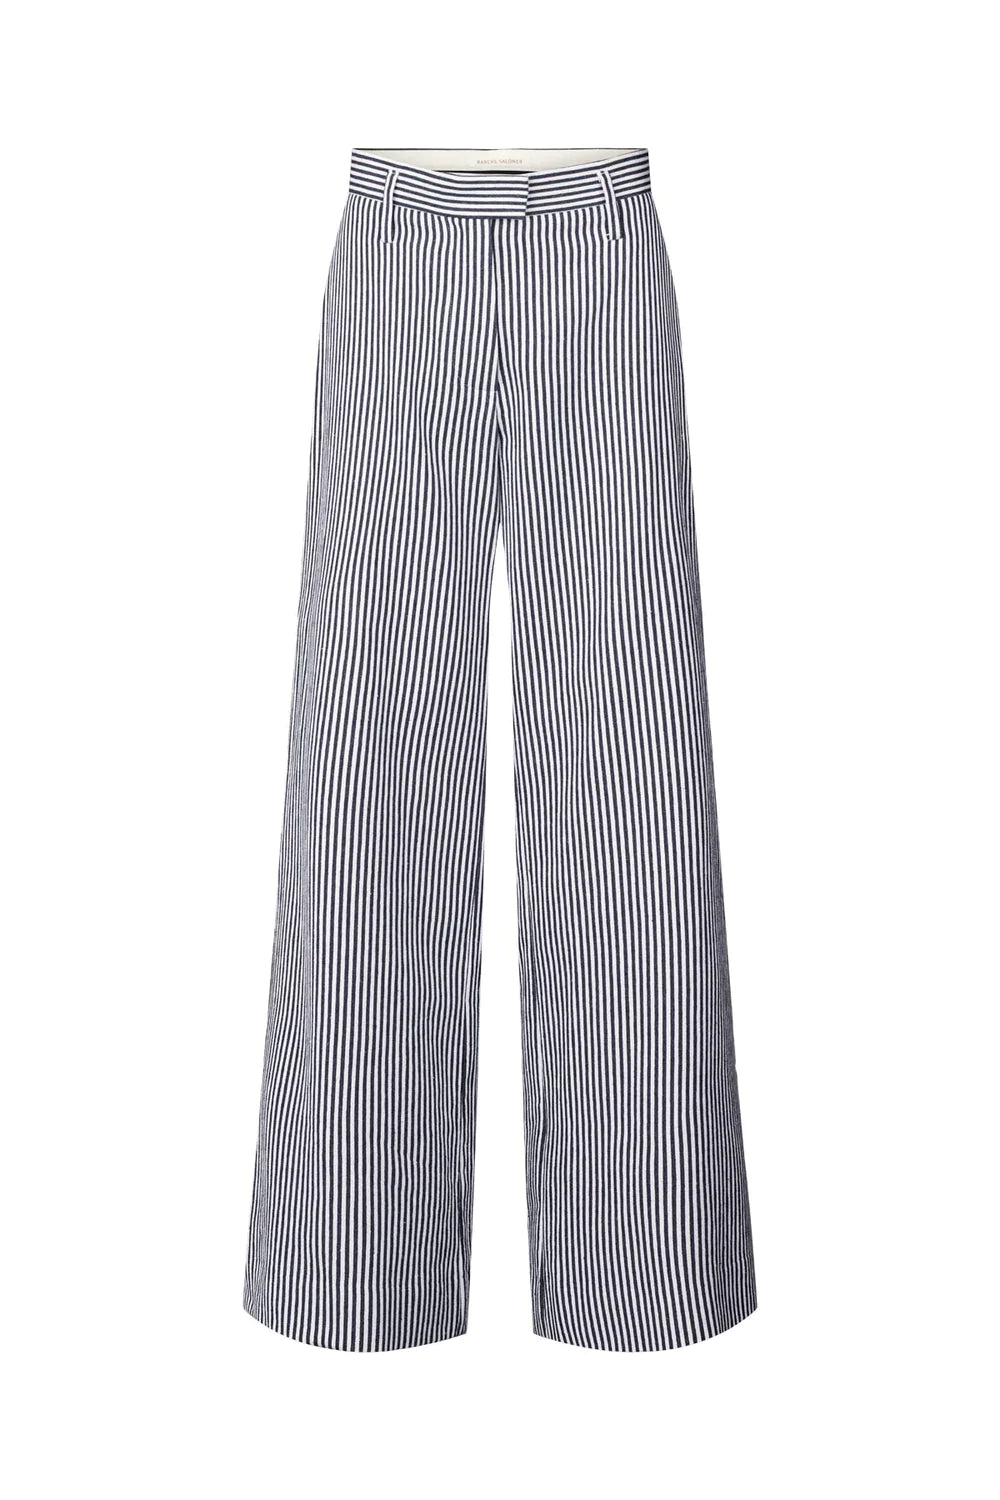 Julia tailorig pant in blue stripe